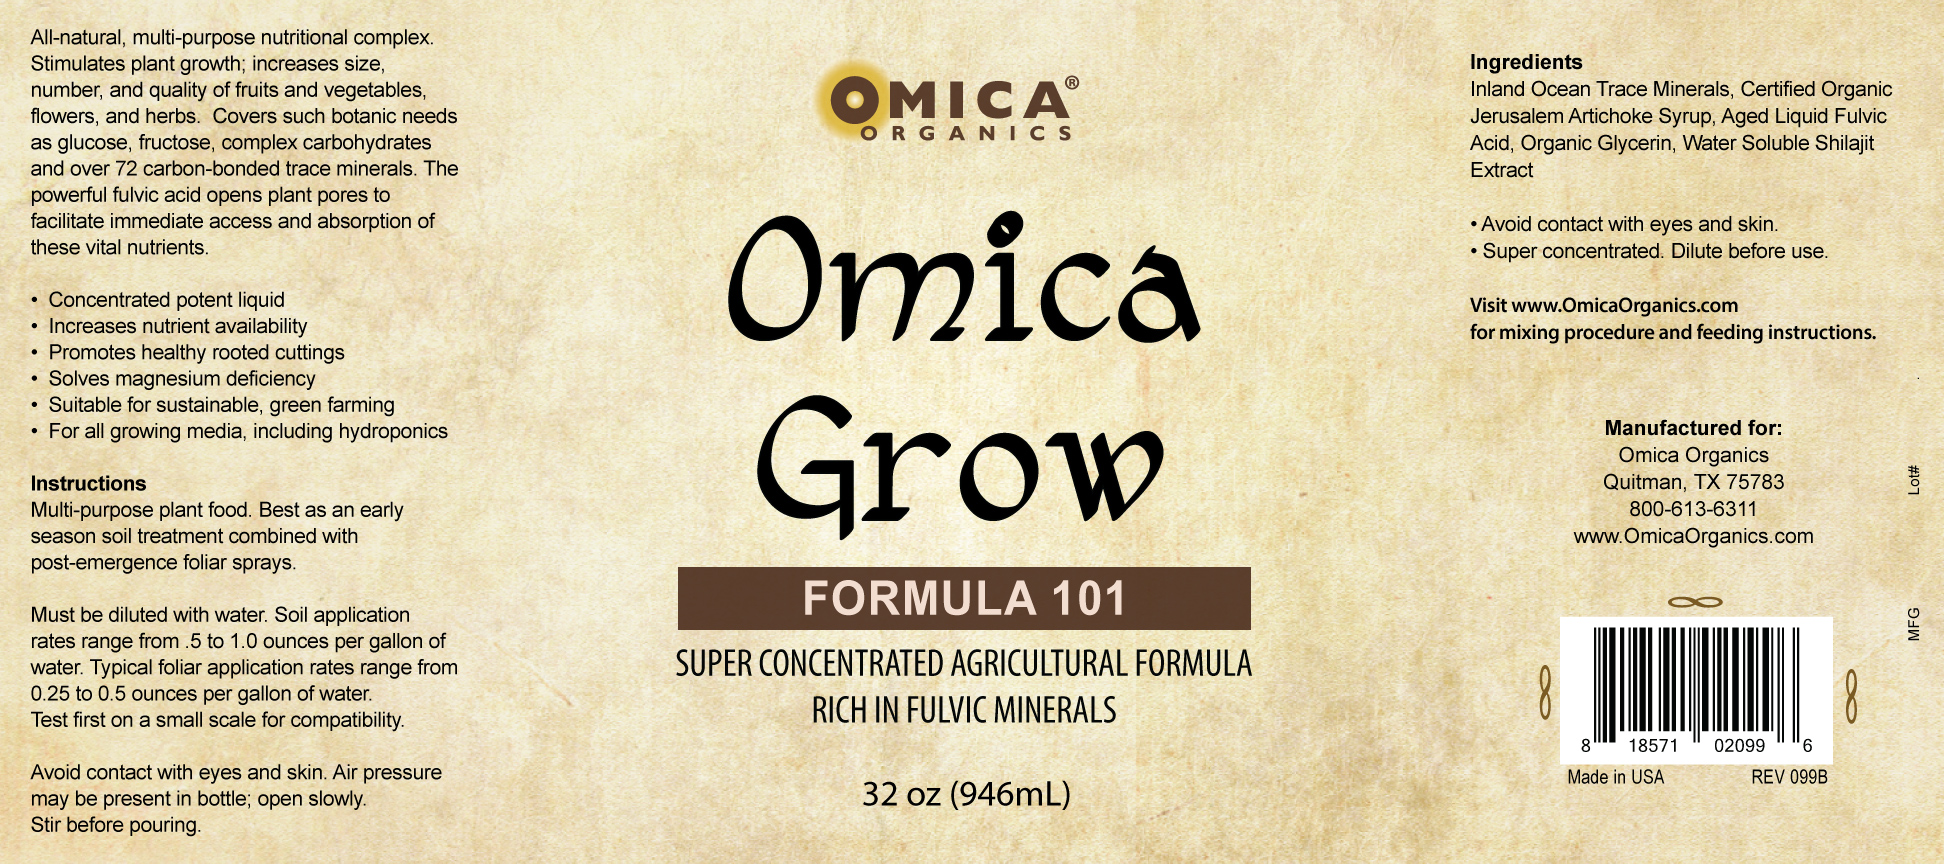 OmicaGrowFormula101